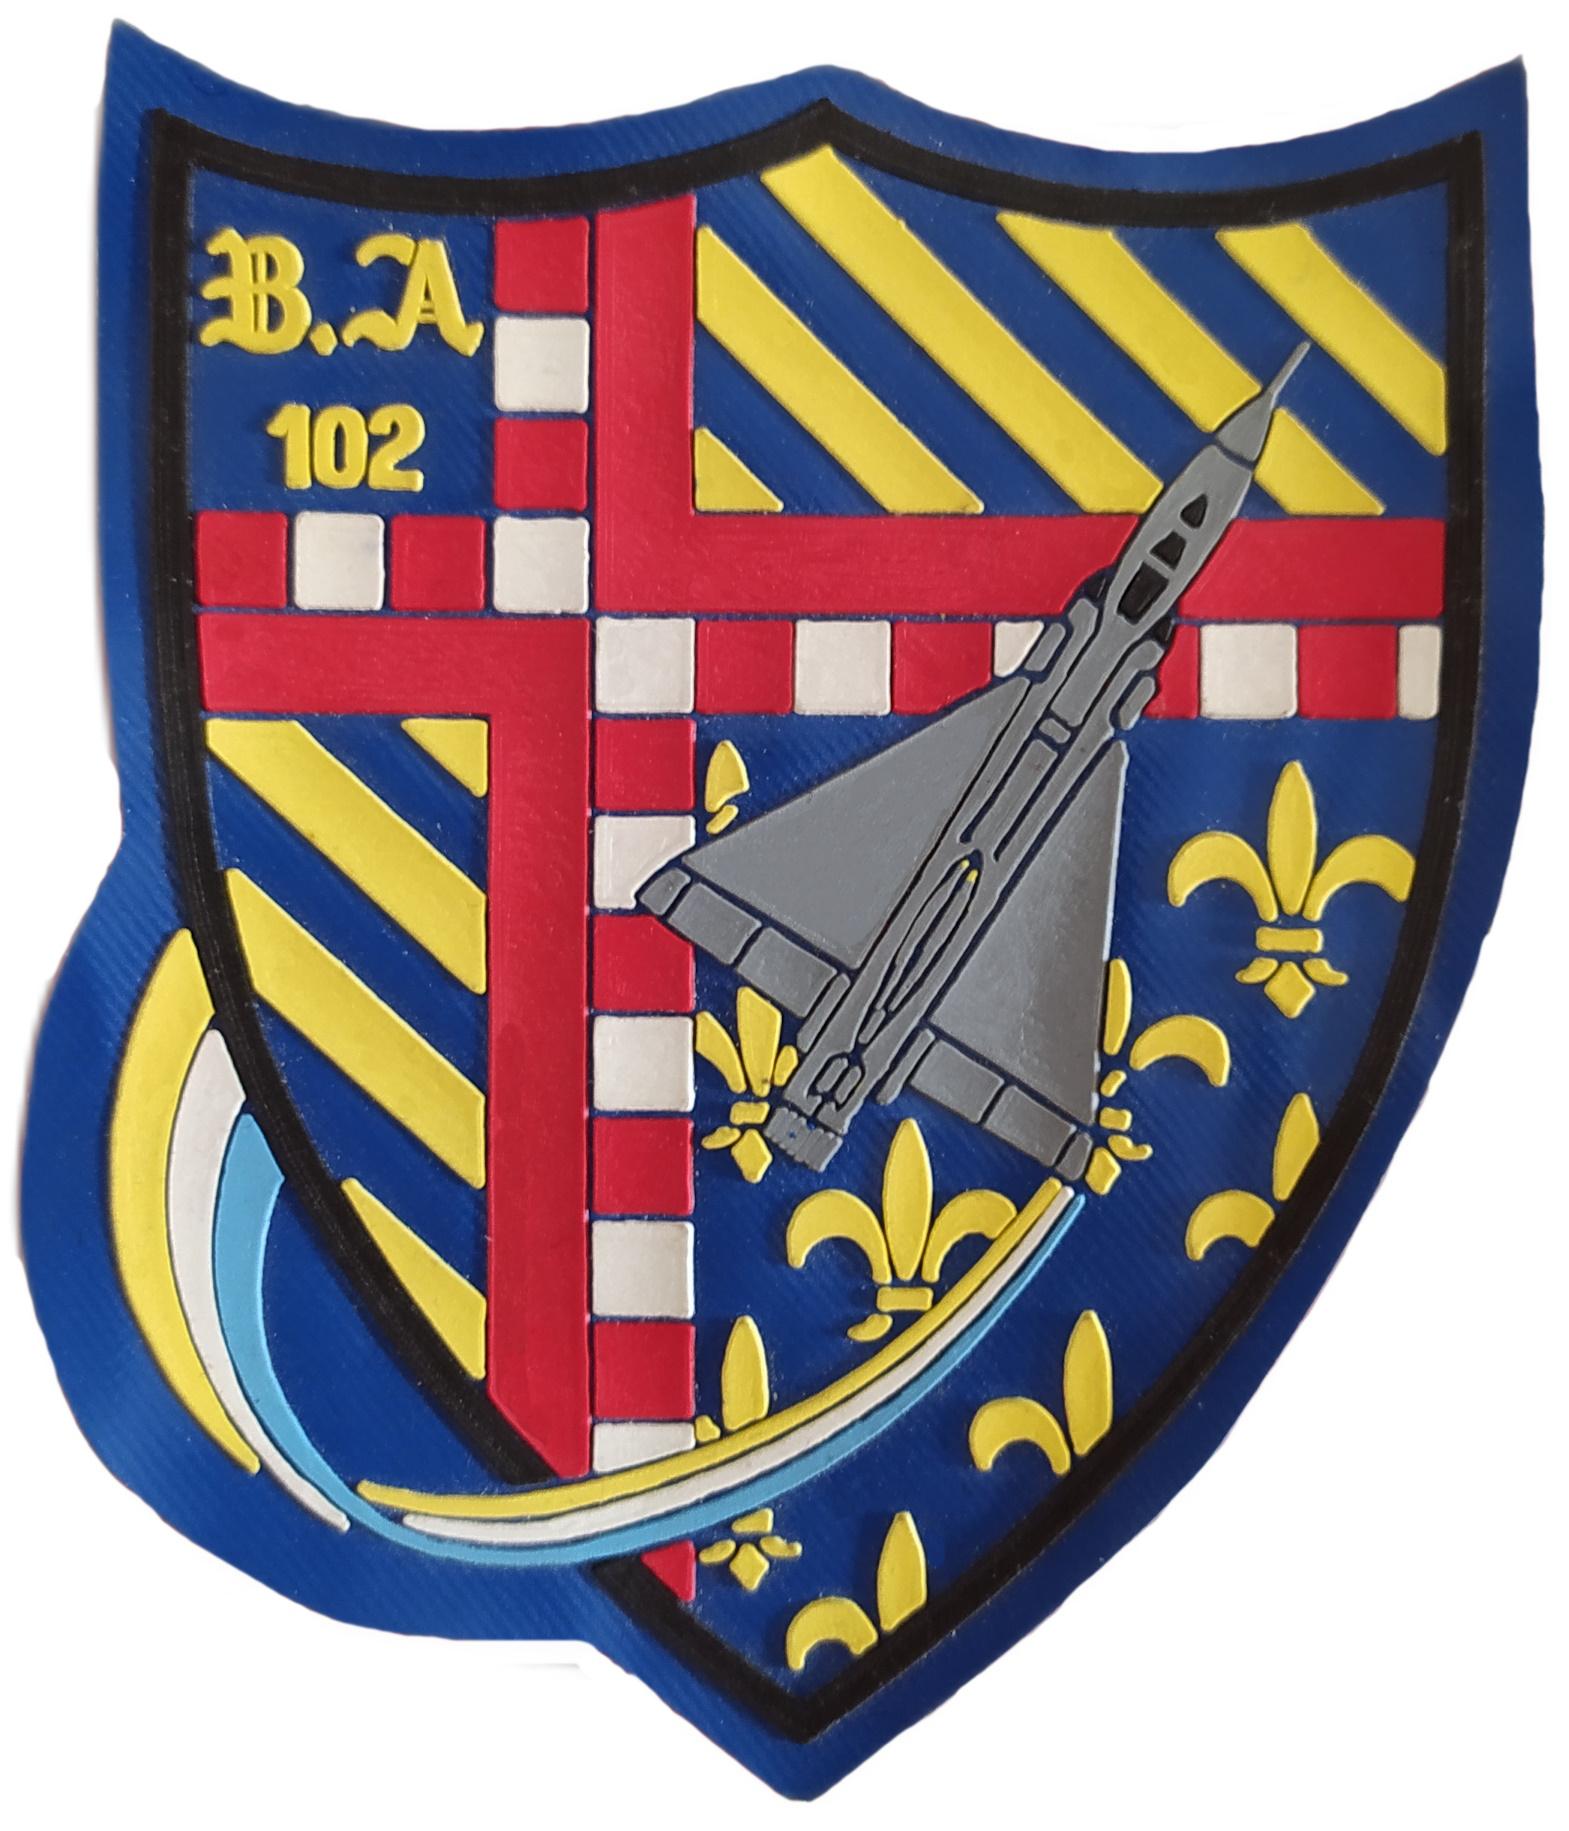 Ejército del Aire Escuadrón 102 Base Aérea de Guynemer Dijón Longvic Aérienne parche insignia emblema distintivo Air Force